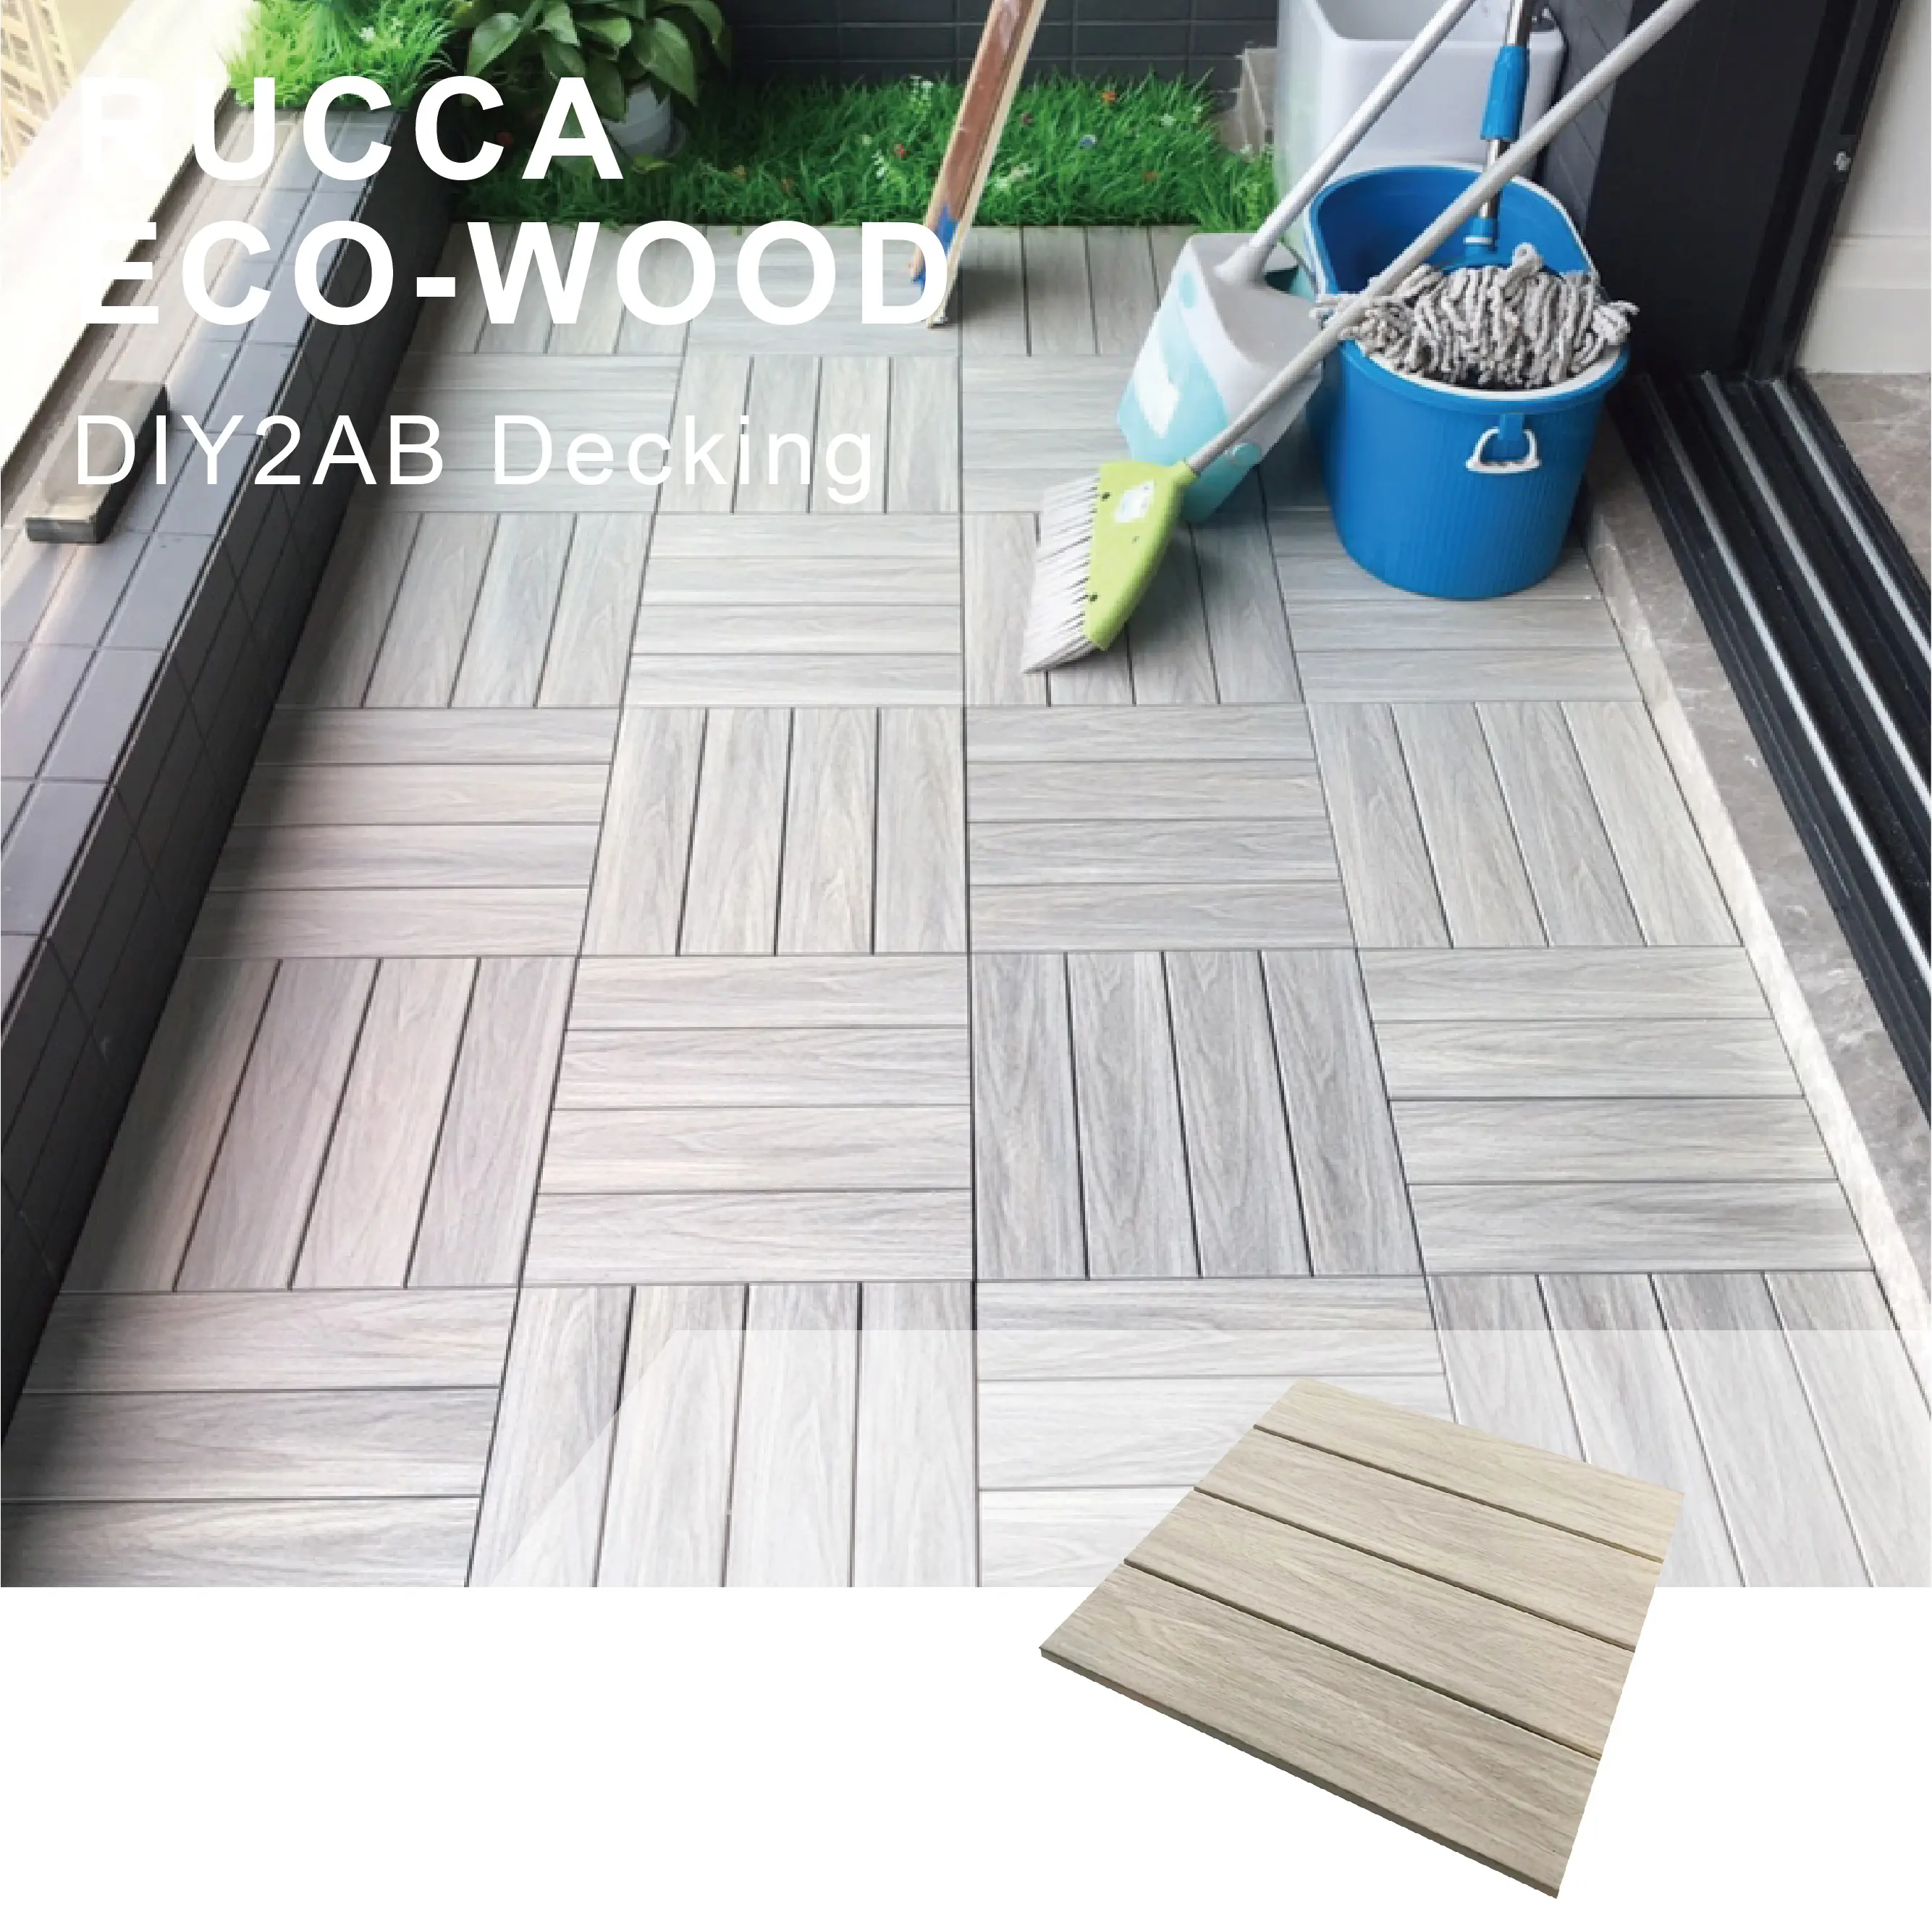 Hotsale WPC Antislip waterproof DIY Interlocking Decking flooring tiles 300*300mm for pool garden puzzle tiles exterior/interior